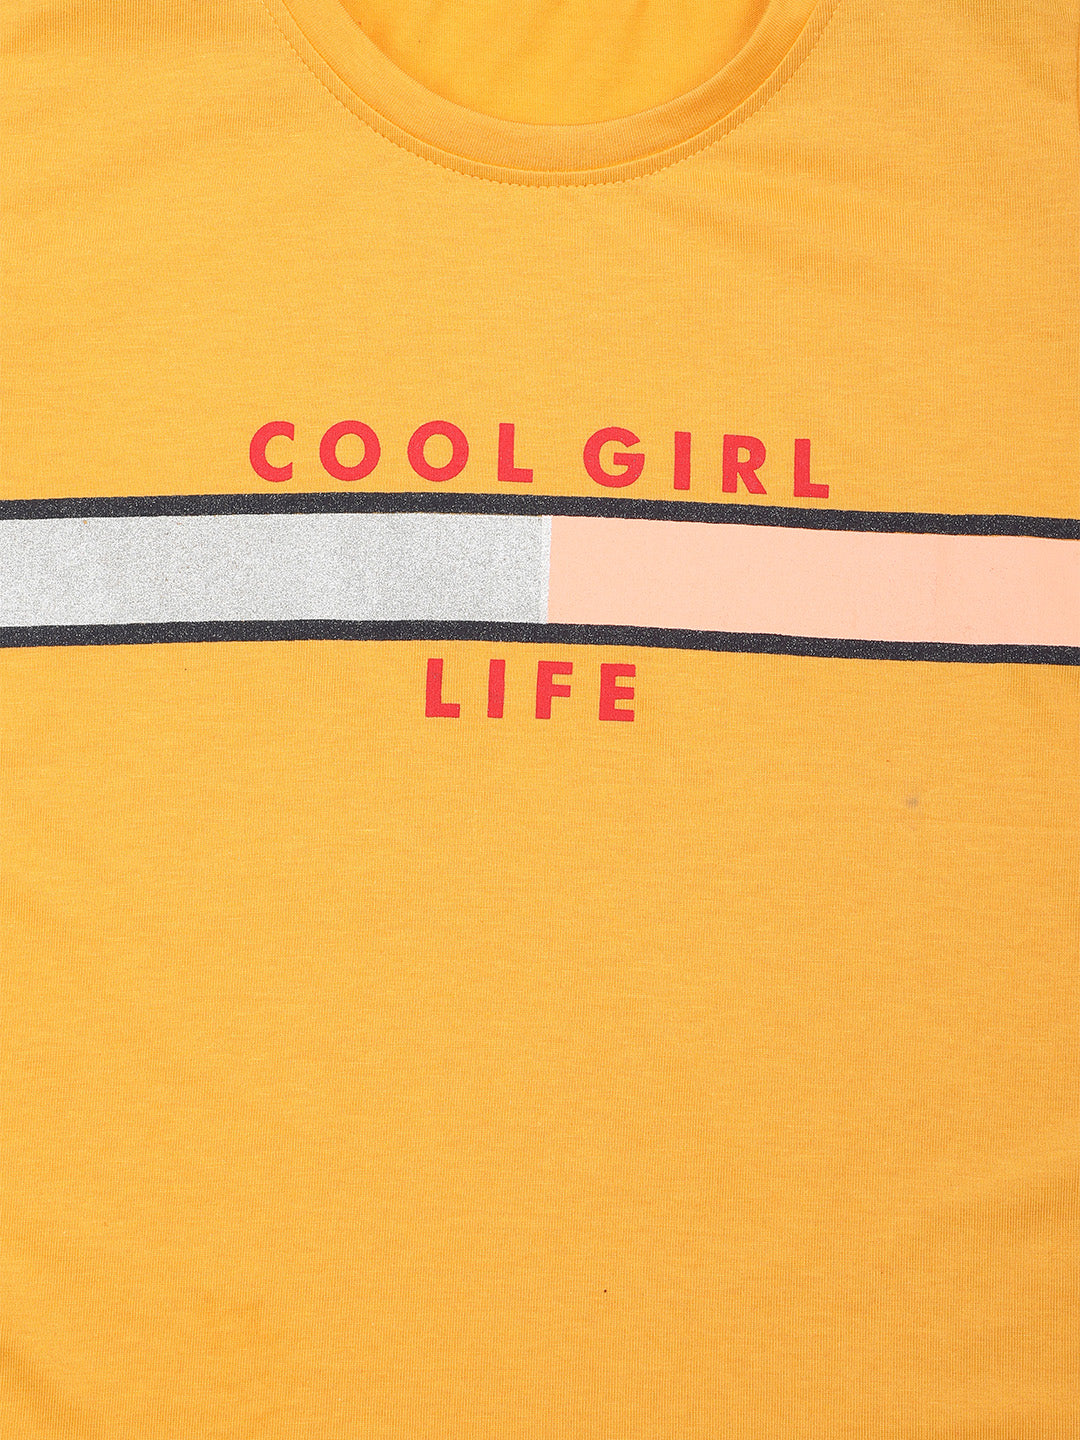 Nins Moda Half Sleeves Cool Girl Print Detailing Top - Yellow